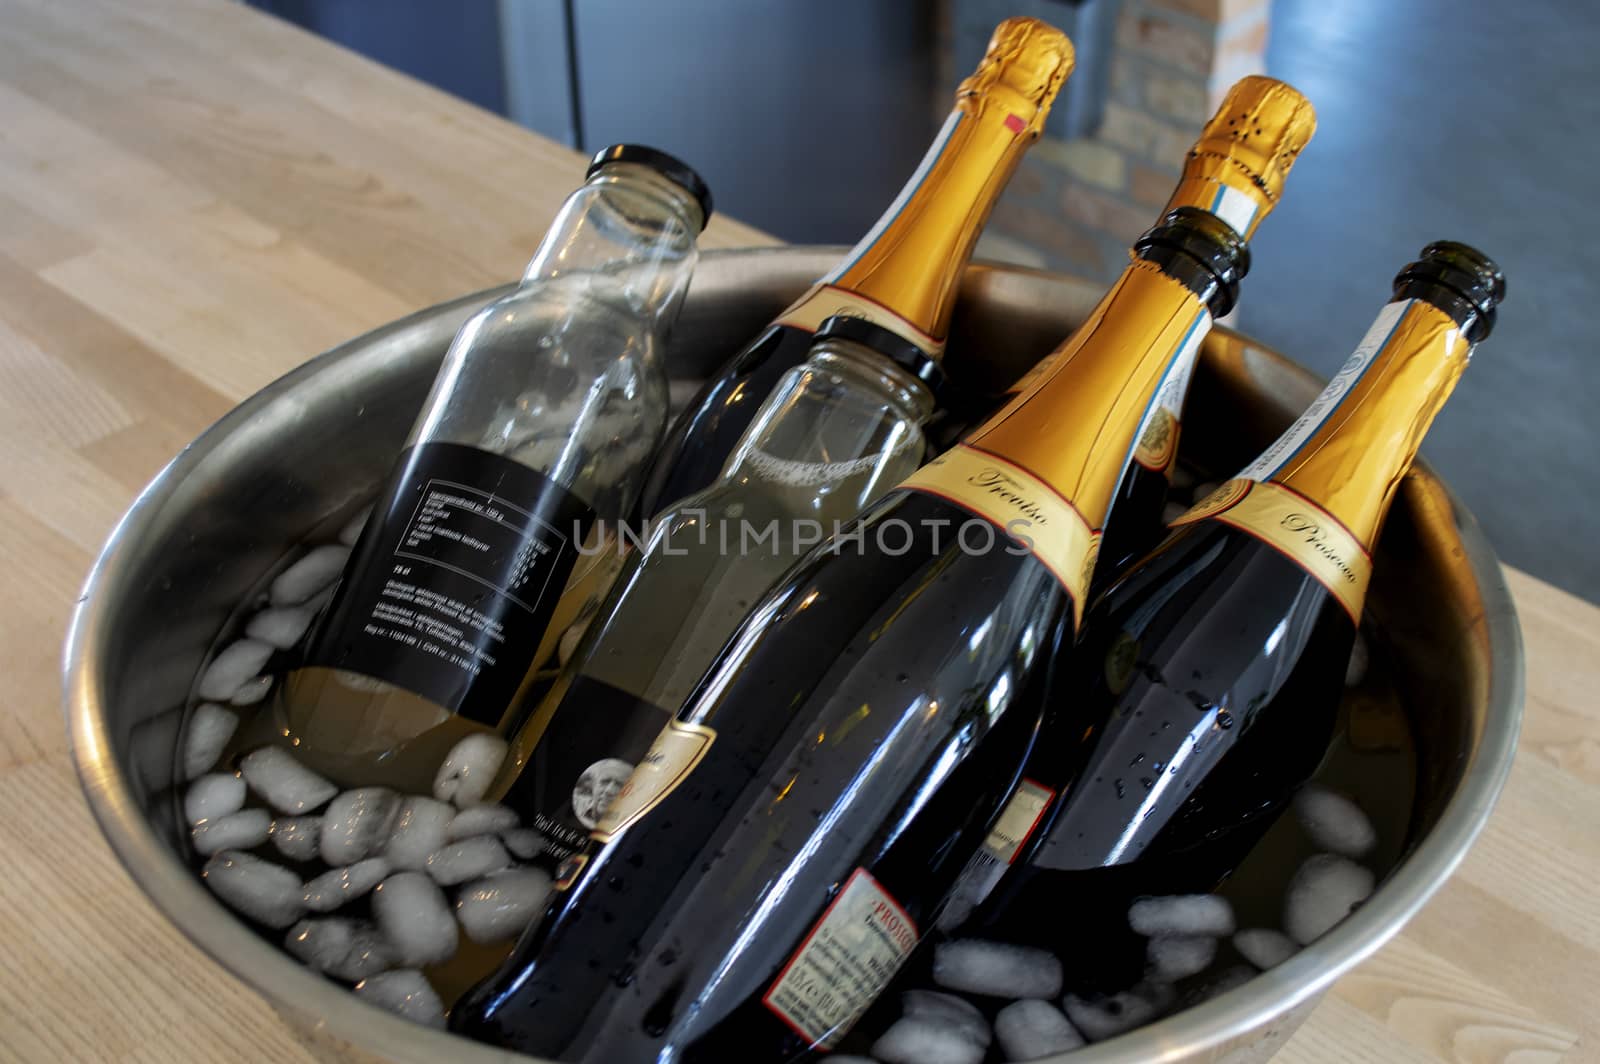 Wine and apple juice bottles in ice bucket by Mads_Hjorth_Jakobsen